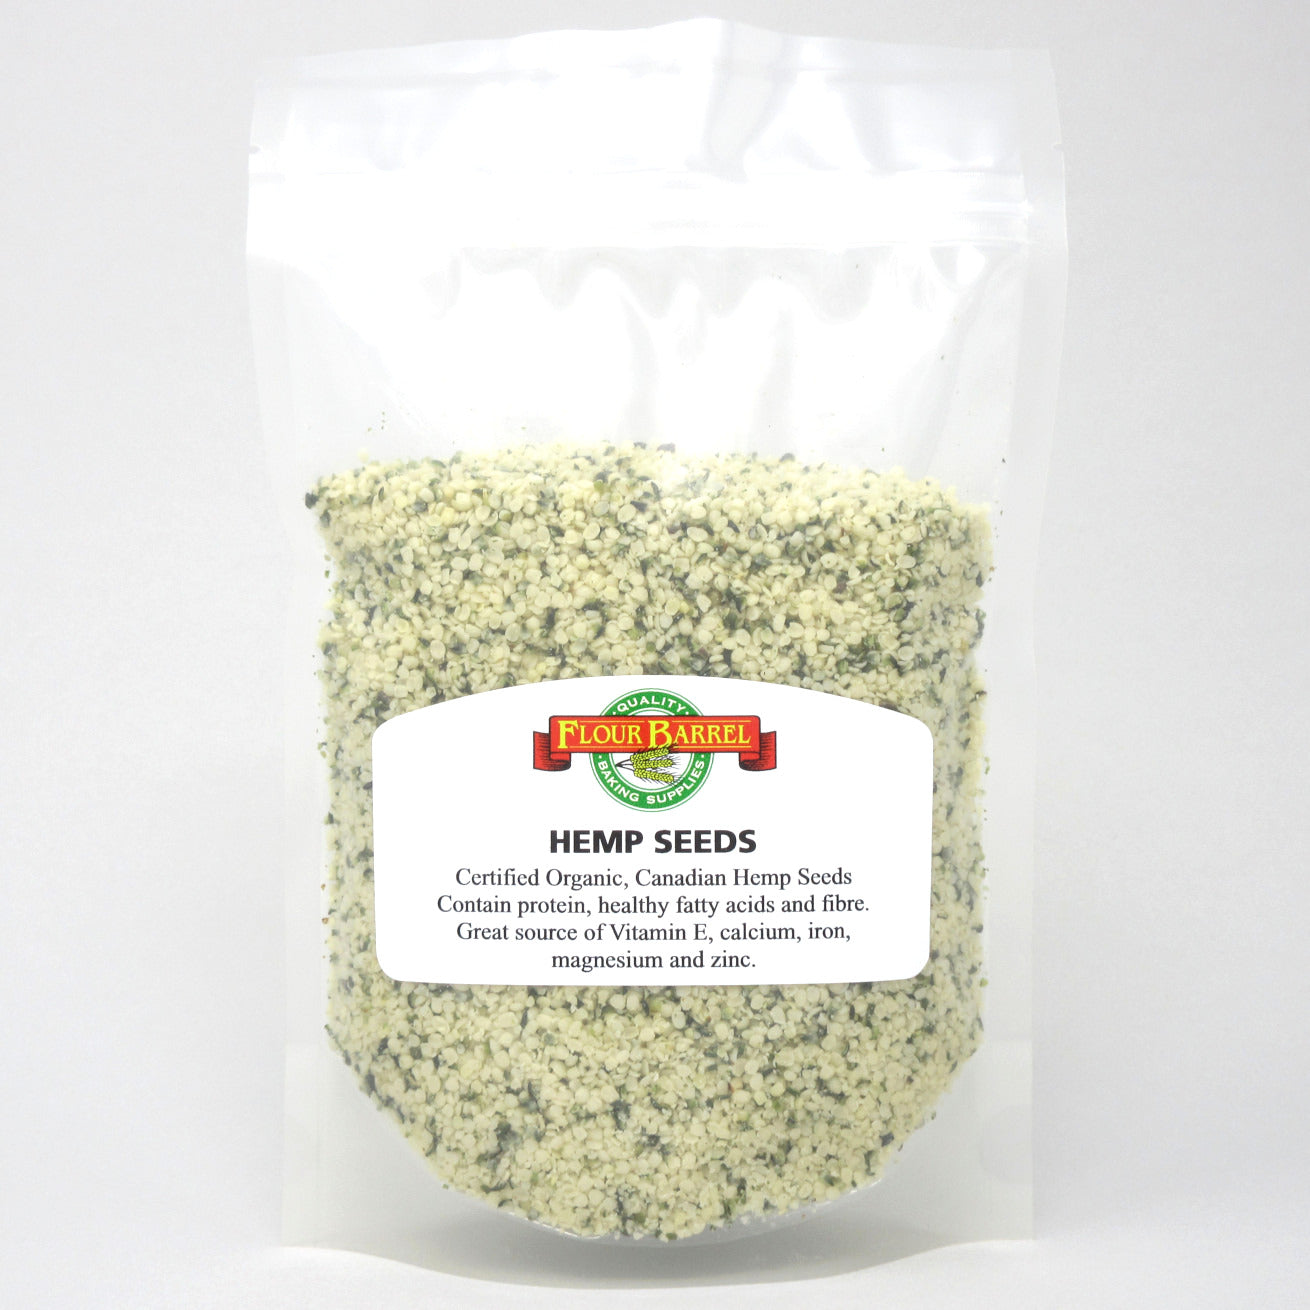 Flour Barrel product image - Hemp Seeds